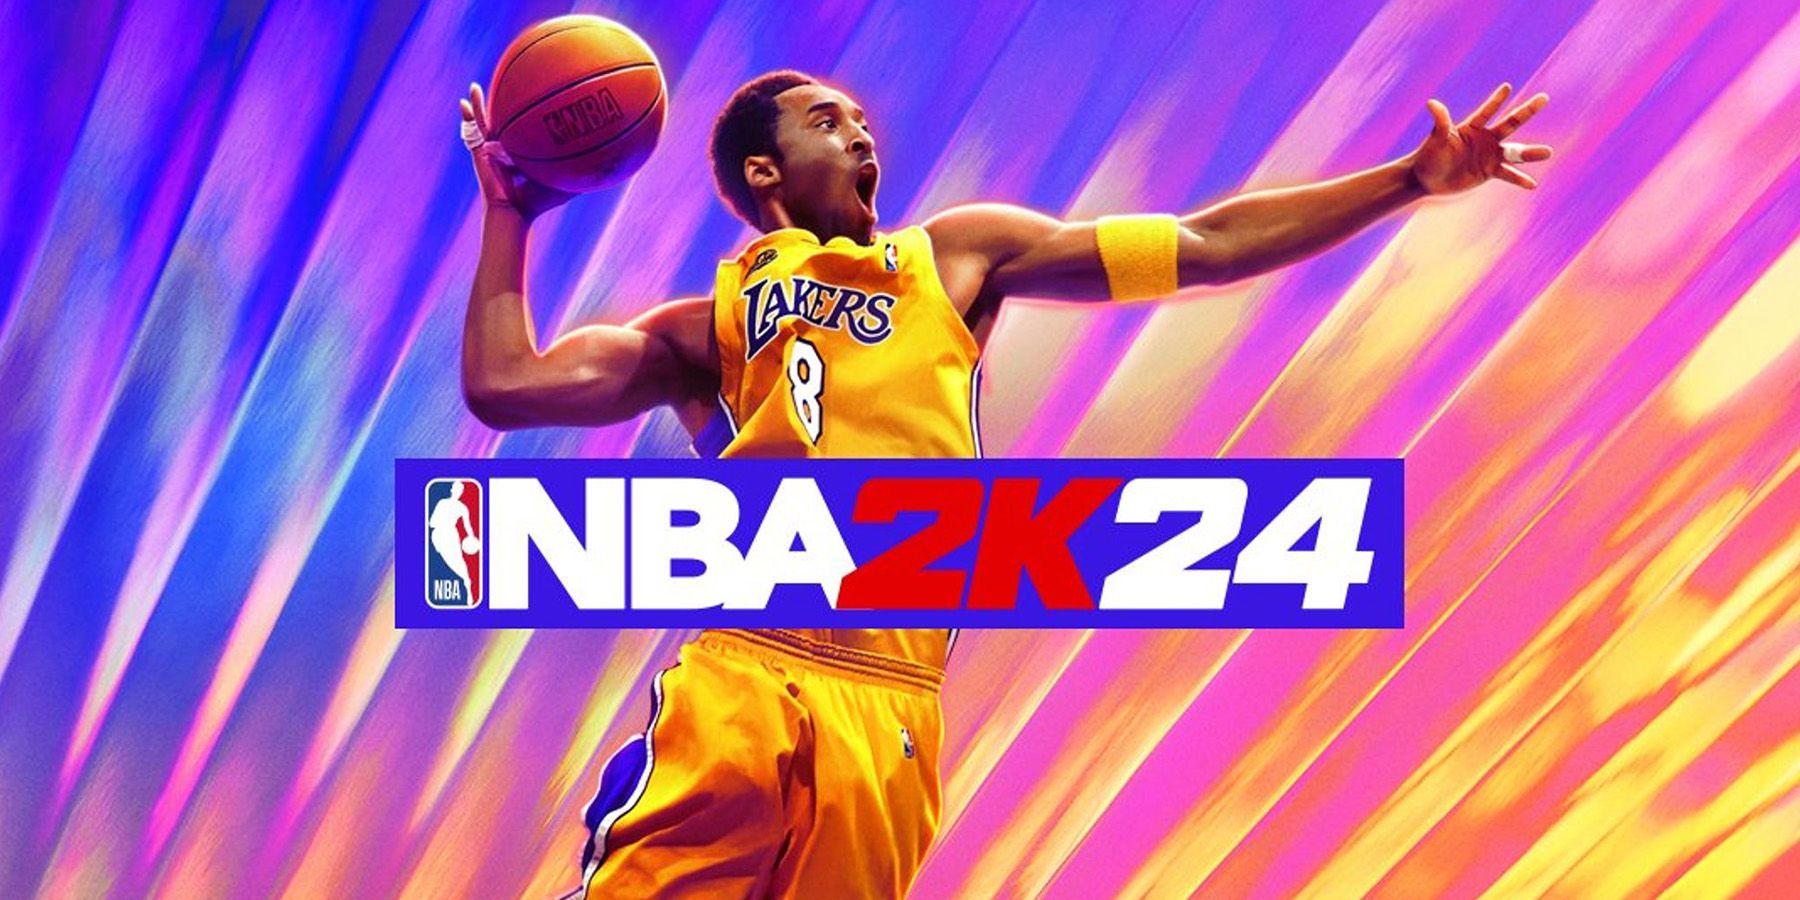 NBA 2K24 Kobe Bryant cover 2x1 aspect ratio